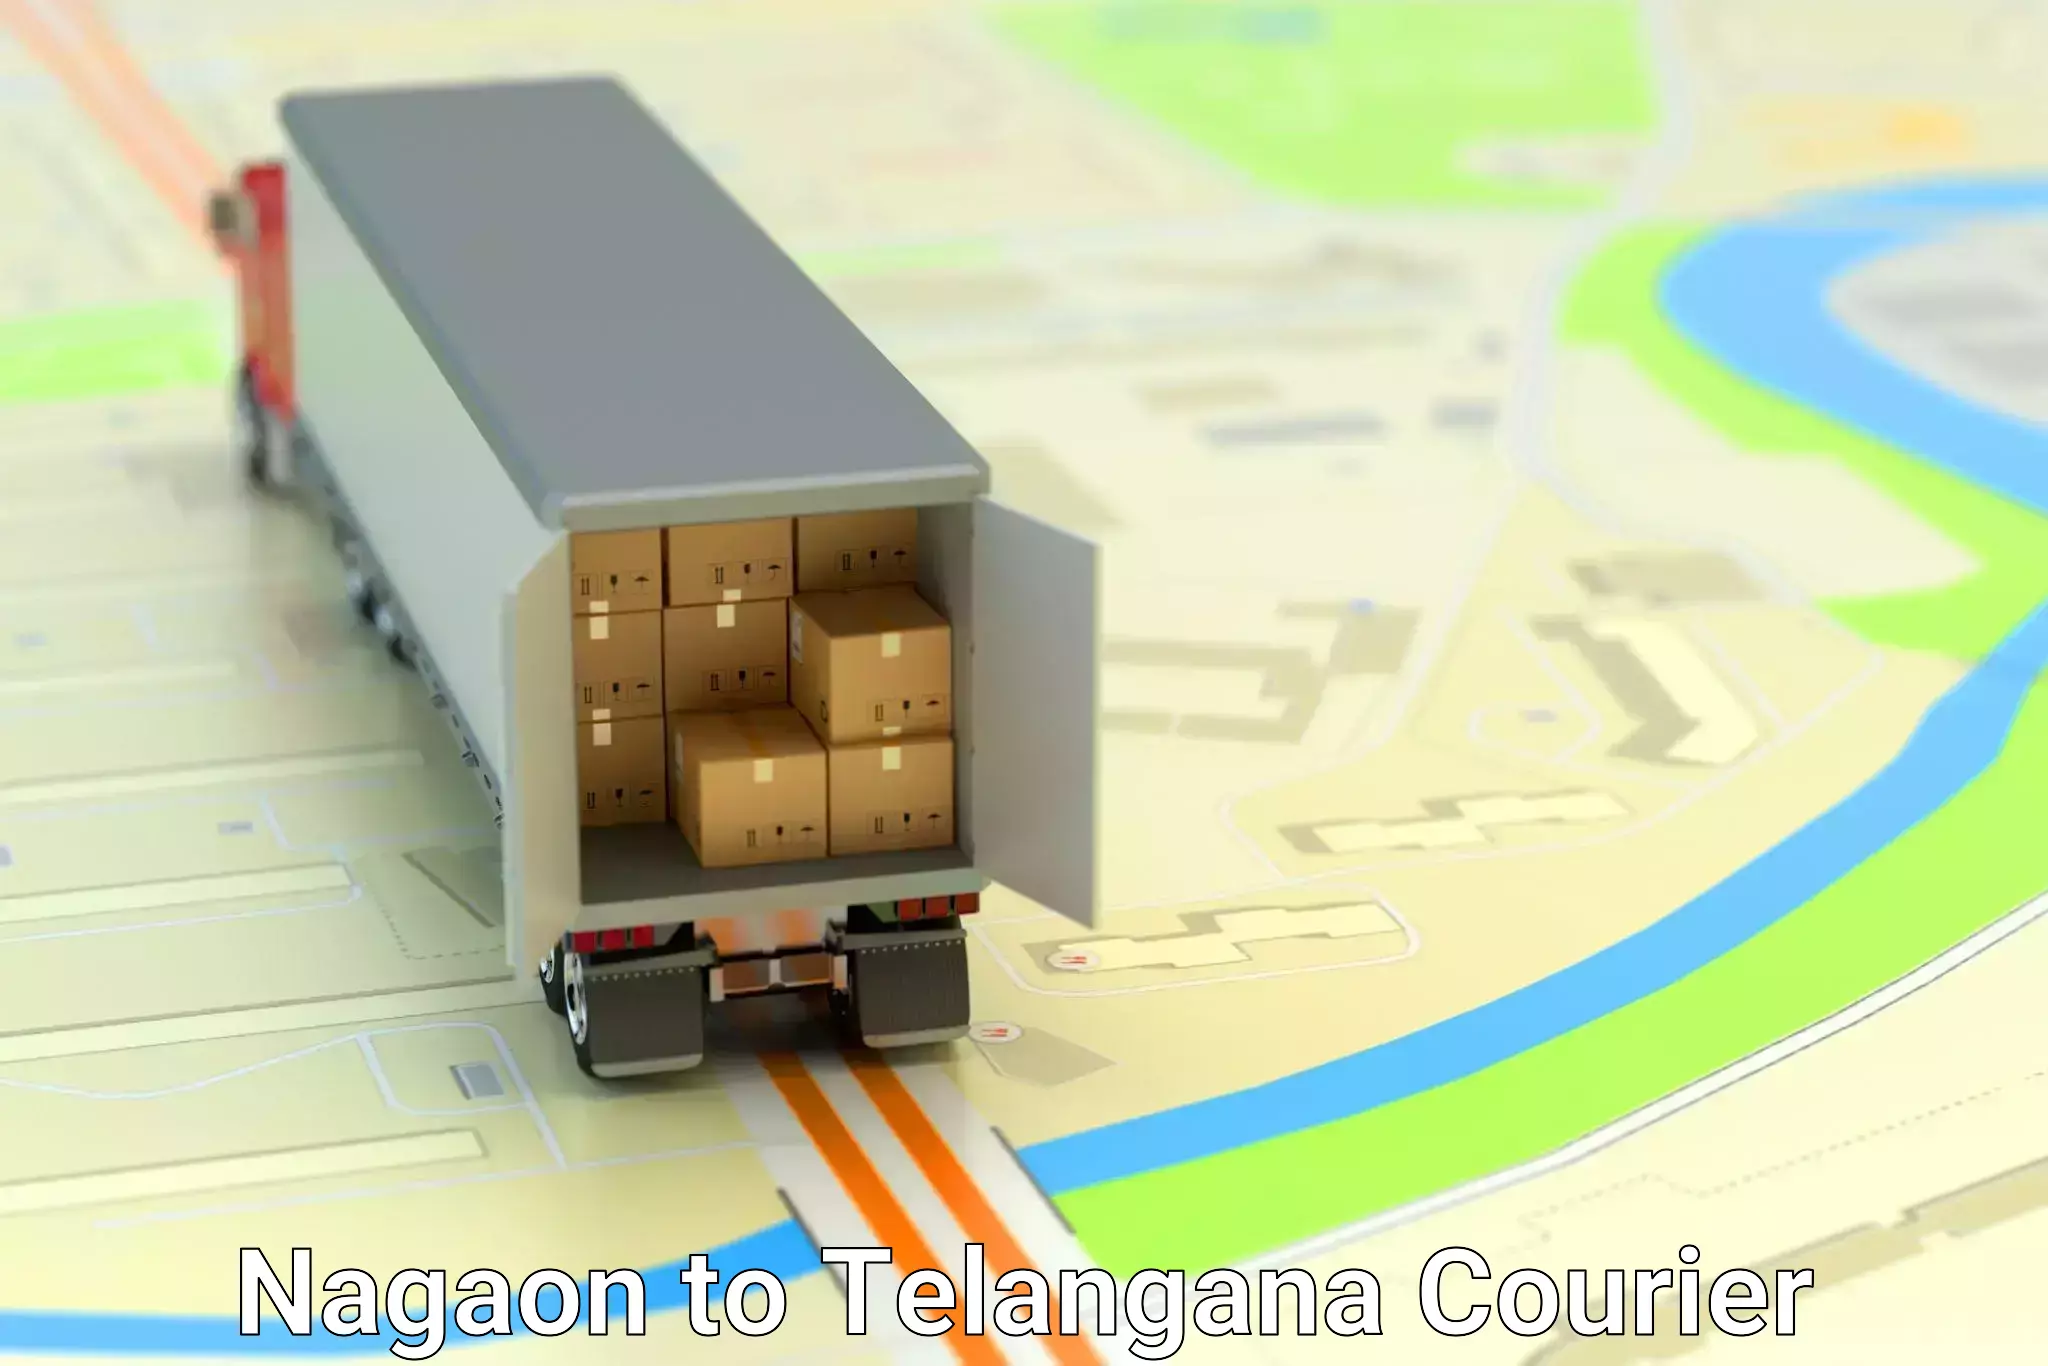 Package delivery network Nagaon to Haliya